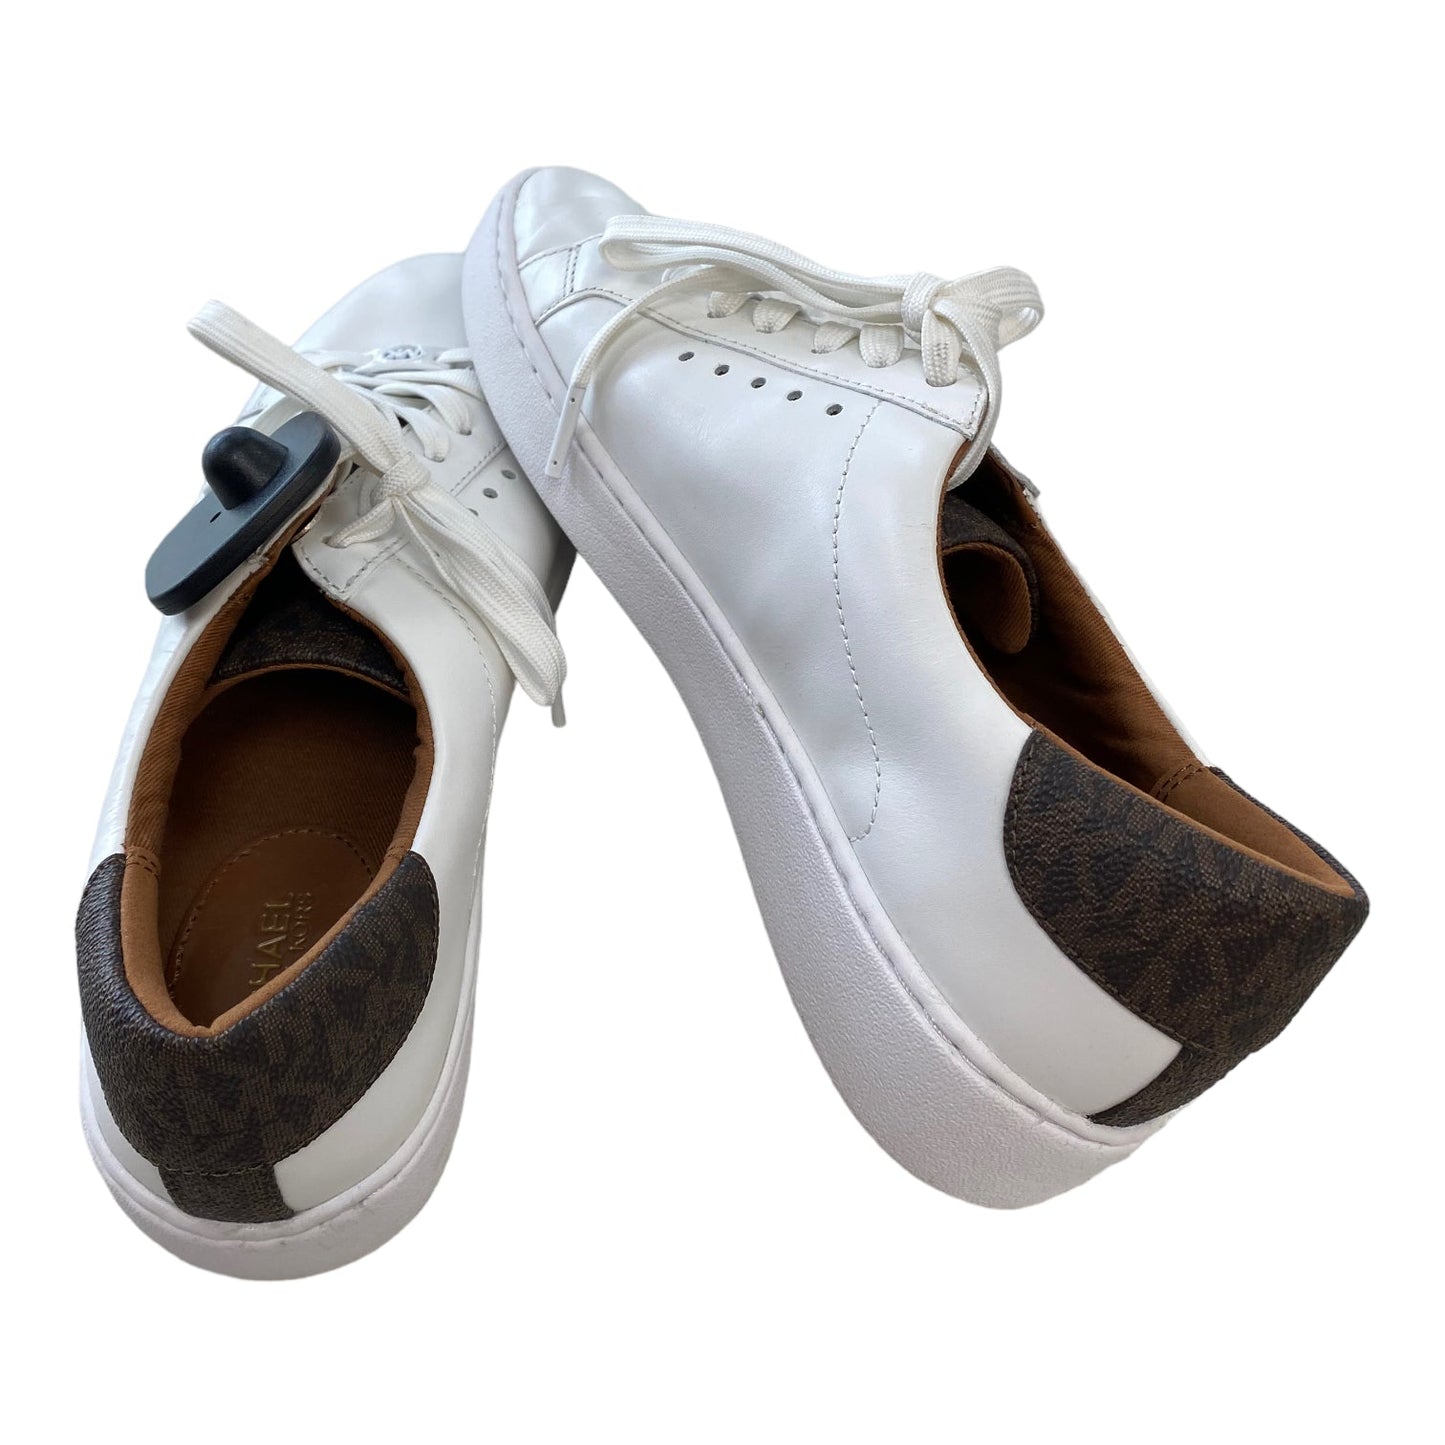 White Shoes Designer Michael By Michael Kors, Size 8